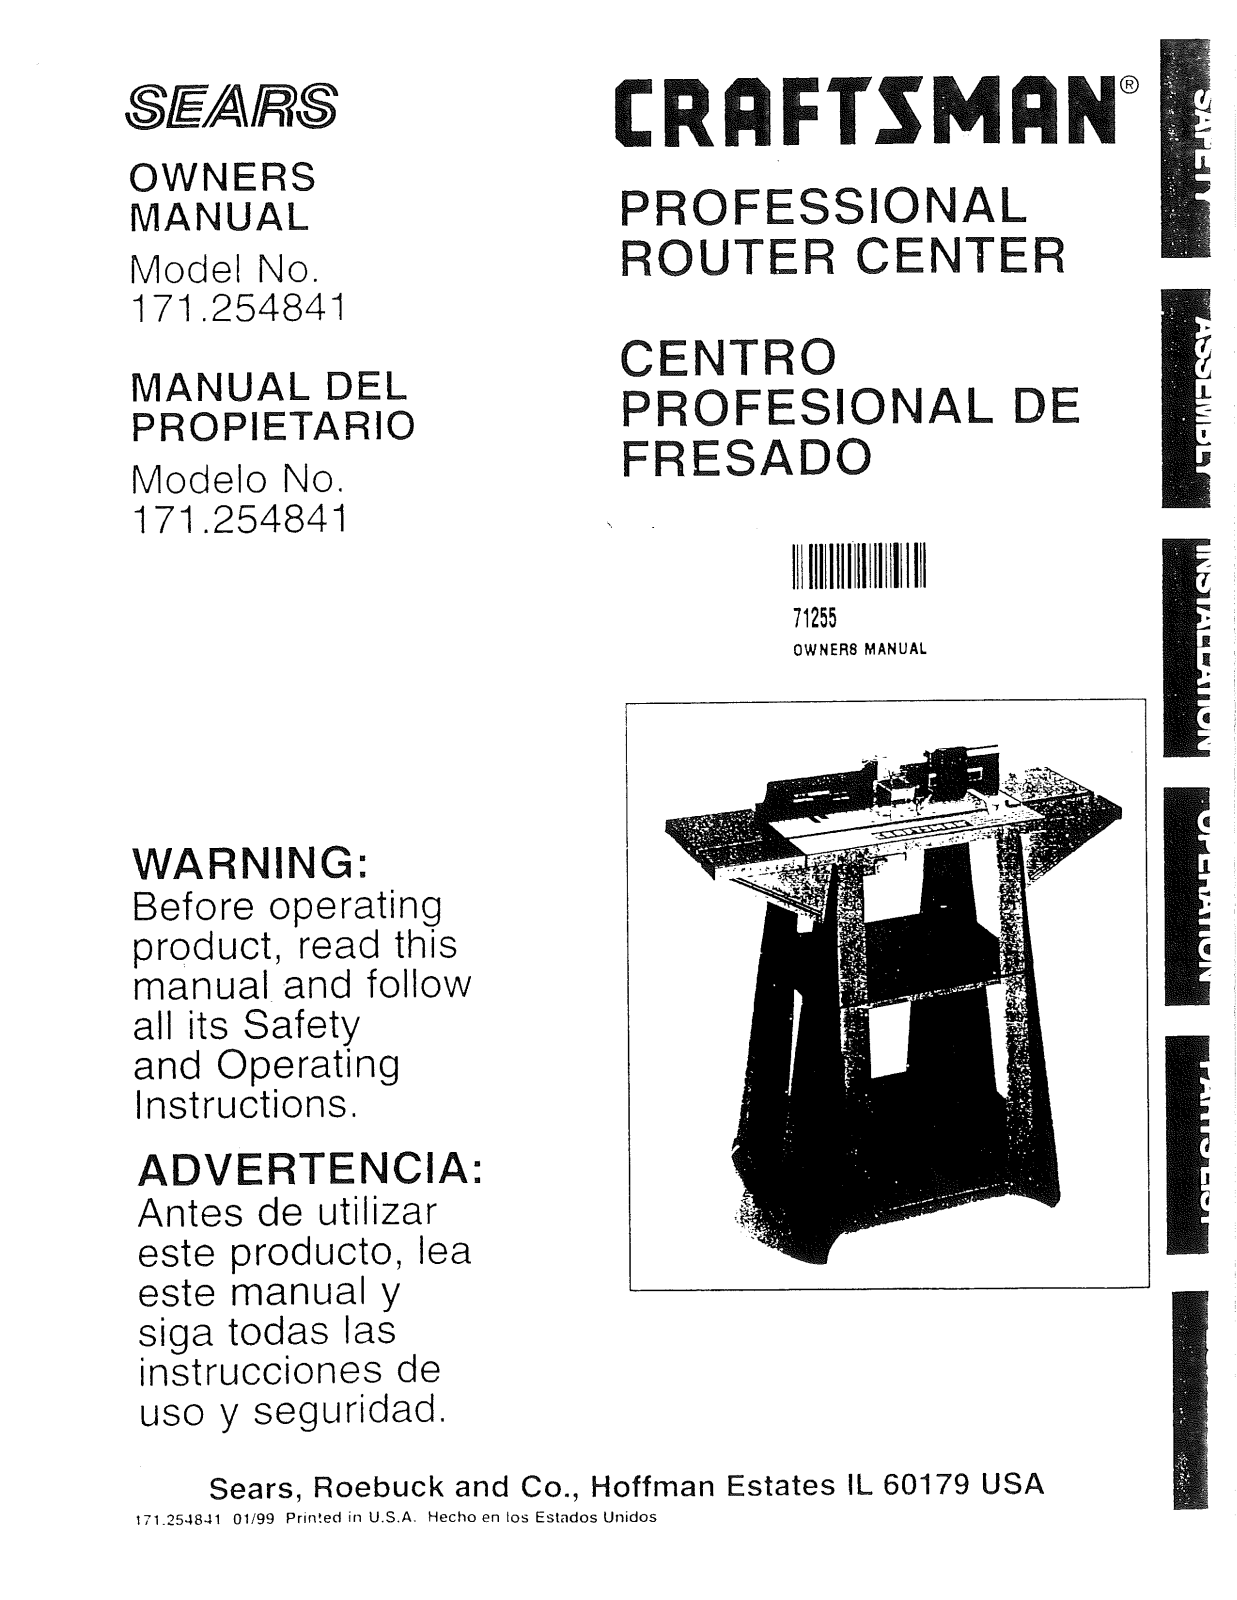 Craftsman 171254841, 17125484 Owner’s Manual